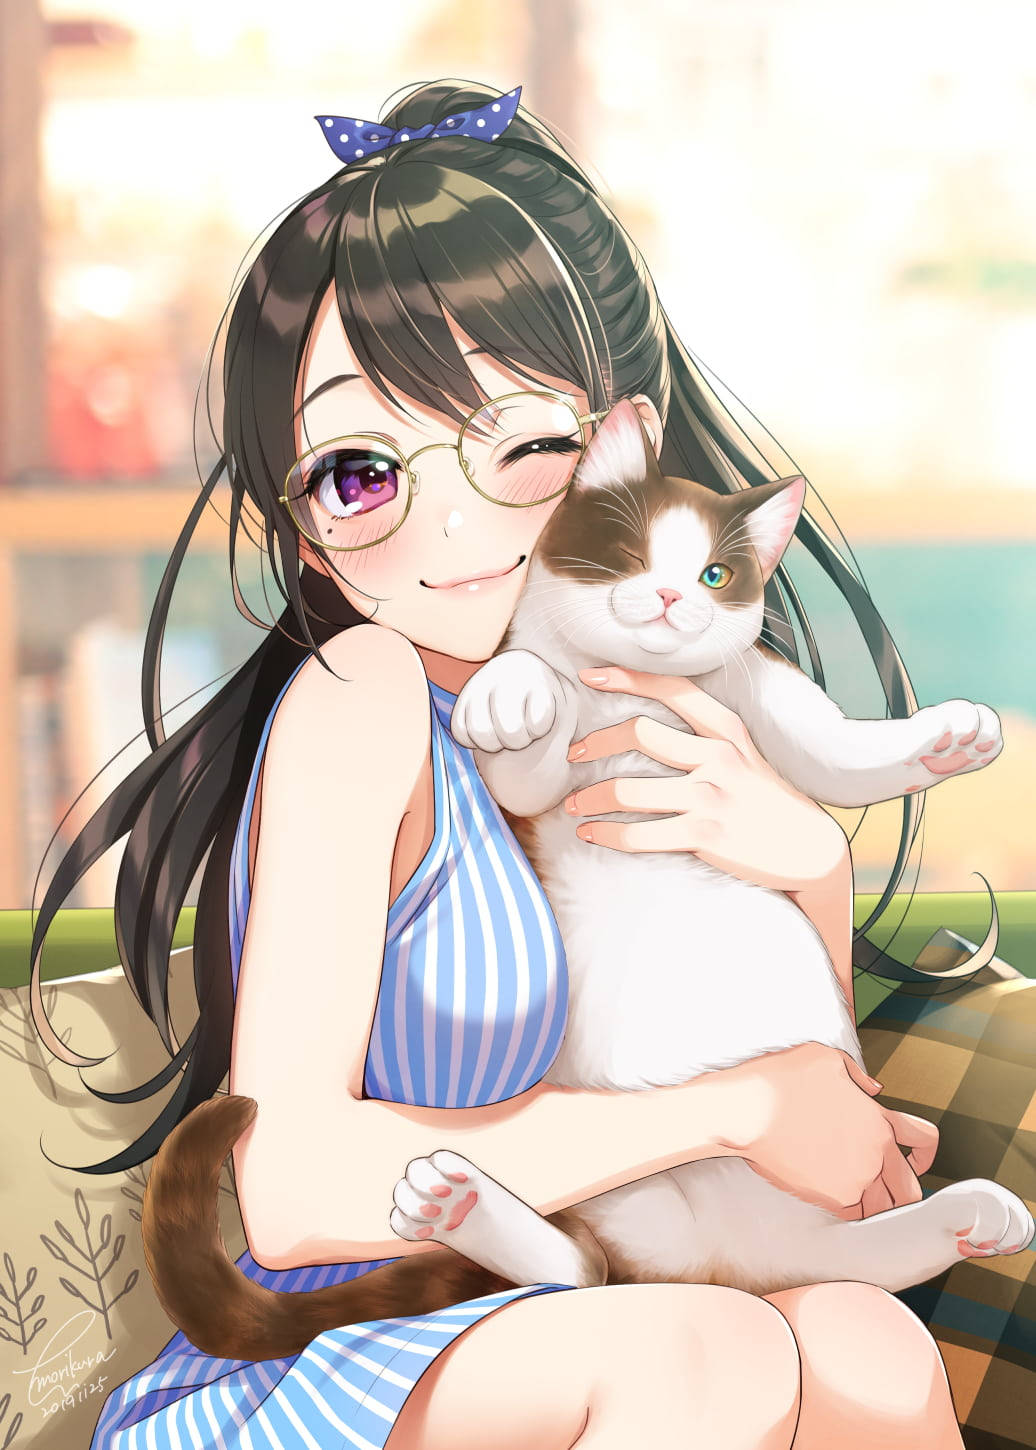 Aesthetic Anime Girl With Cat Wallpaper